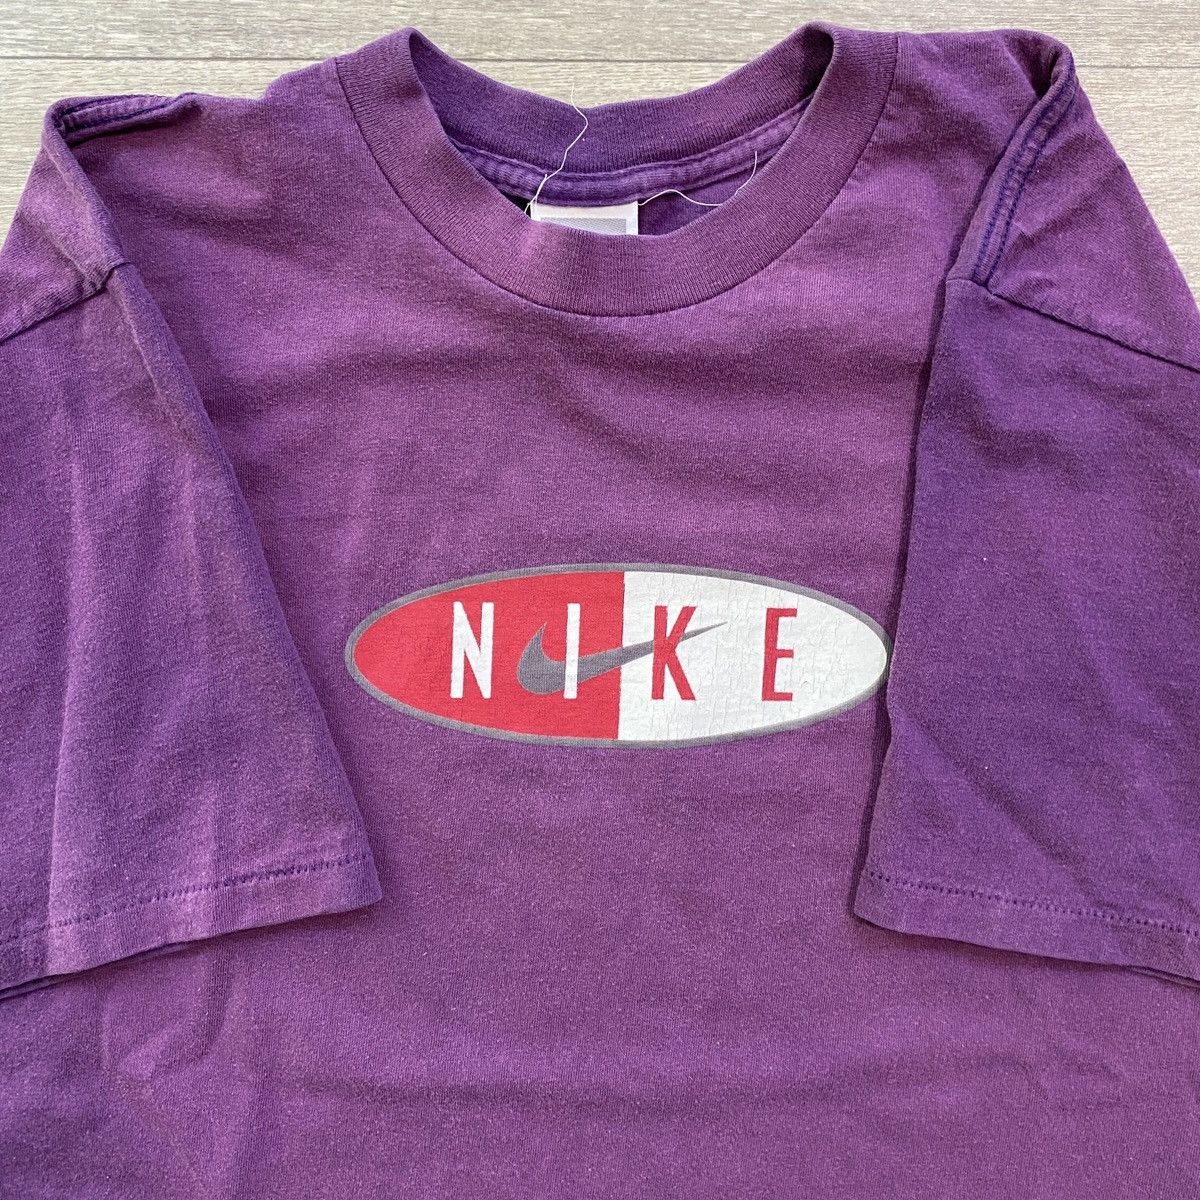 Nike Vintage 90s Nike Sunfaded Purple Logo T-Shirt Size US M / EU 48-50 / 2 - 4 Preview